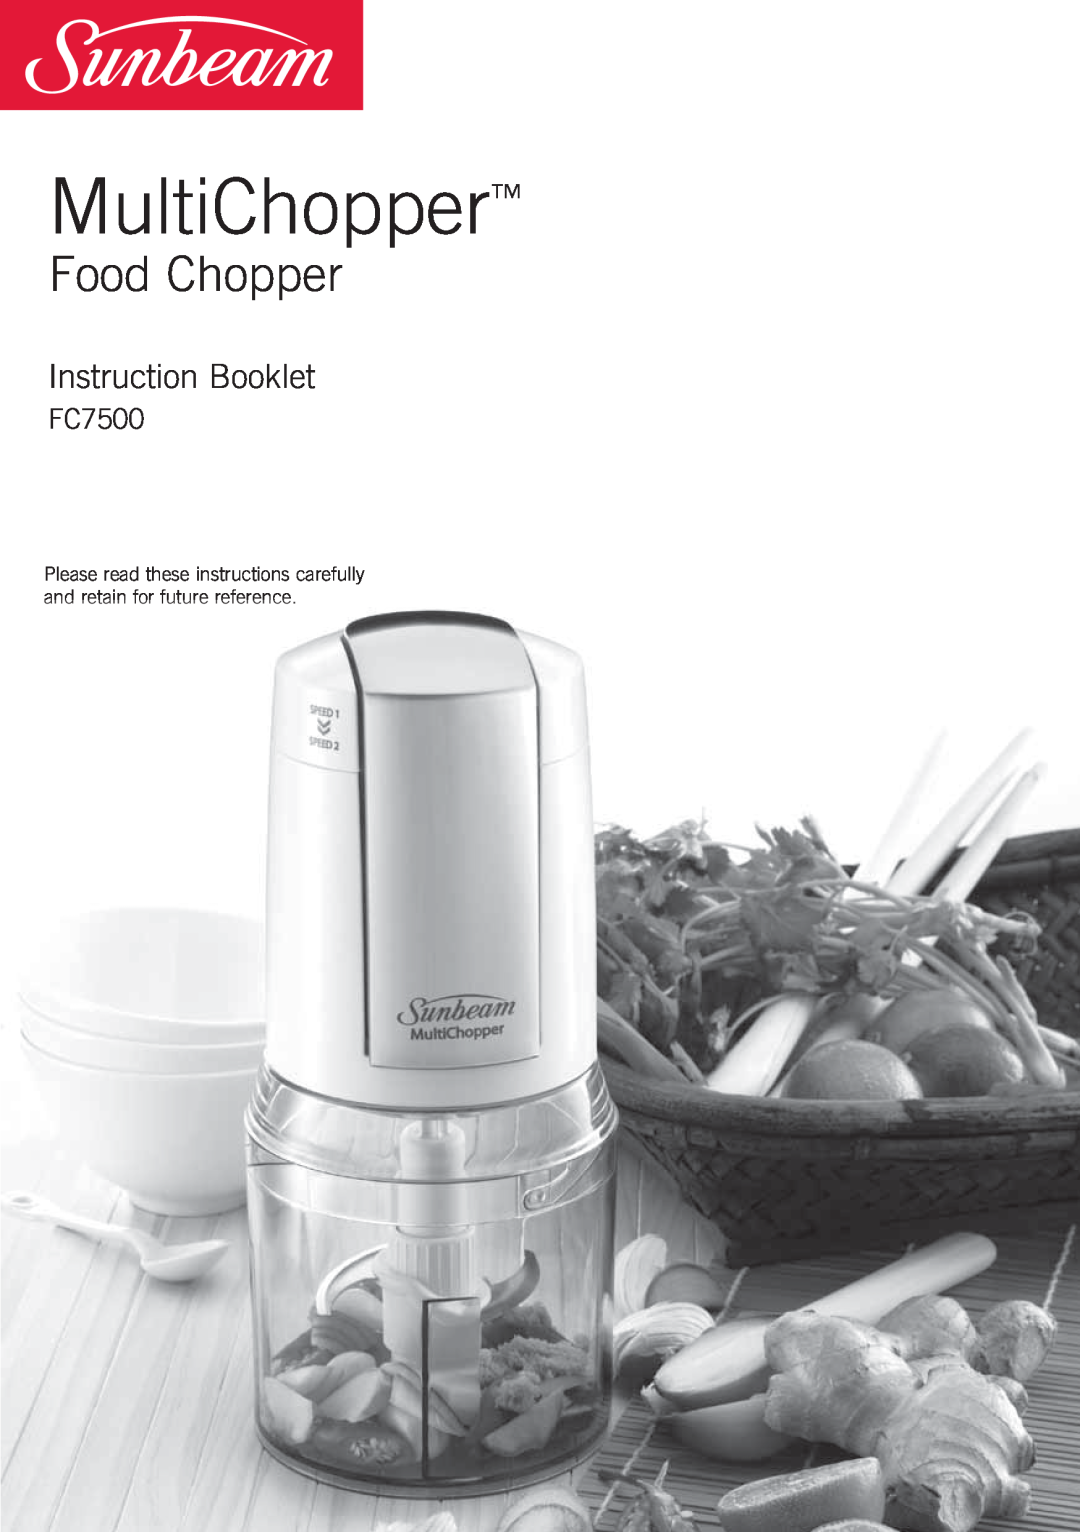 Sunbeam FC7500 manual MultiChopper, Food Chopper, Instruction Booklet 